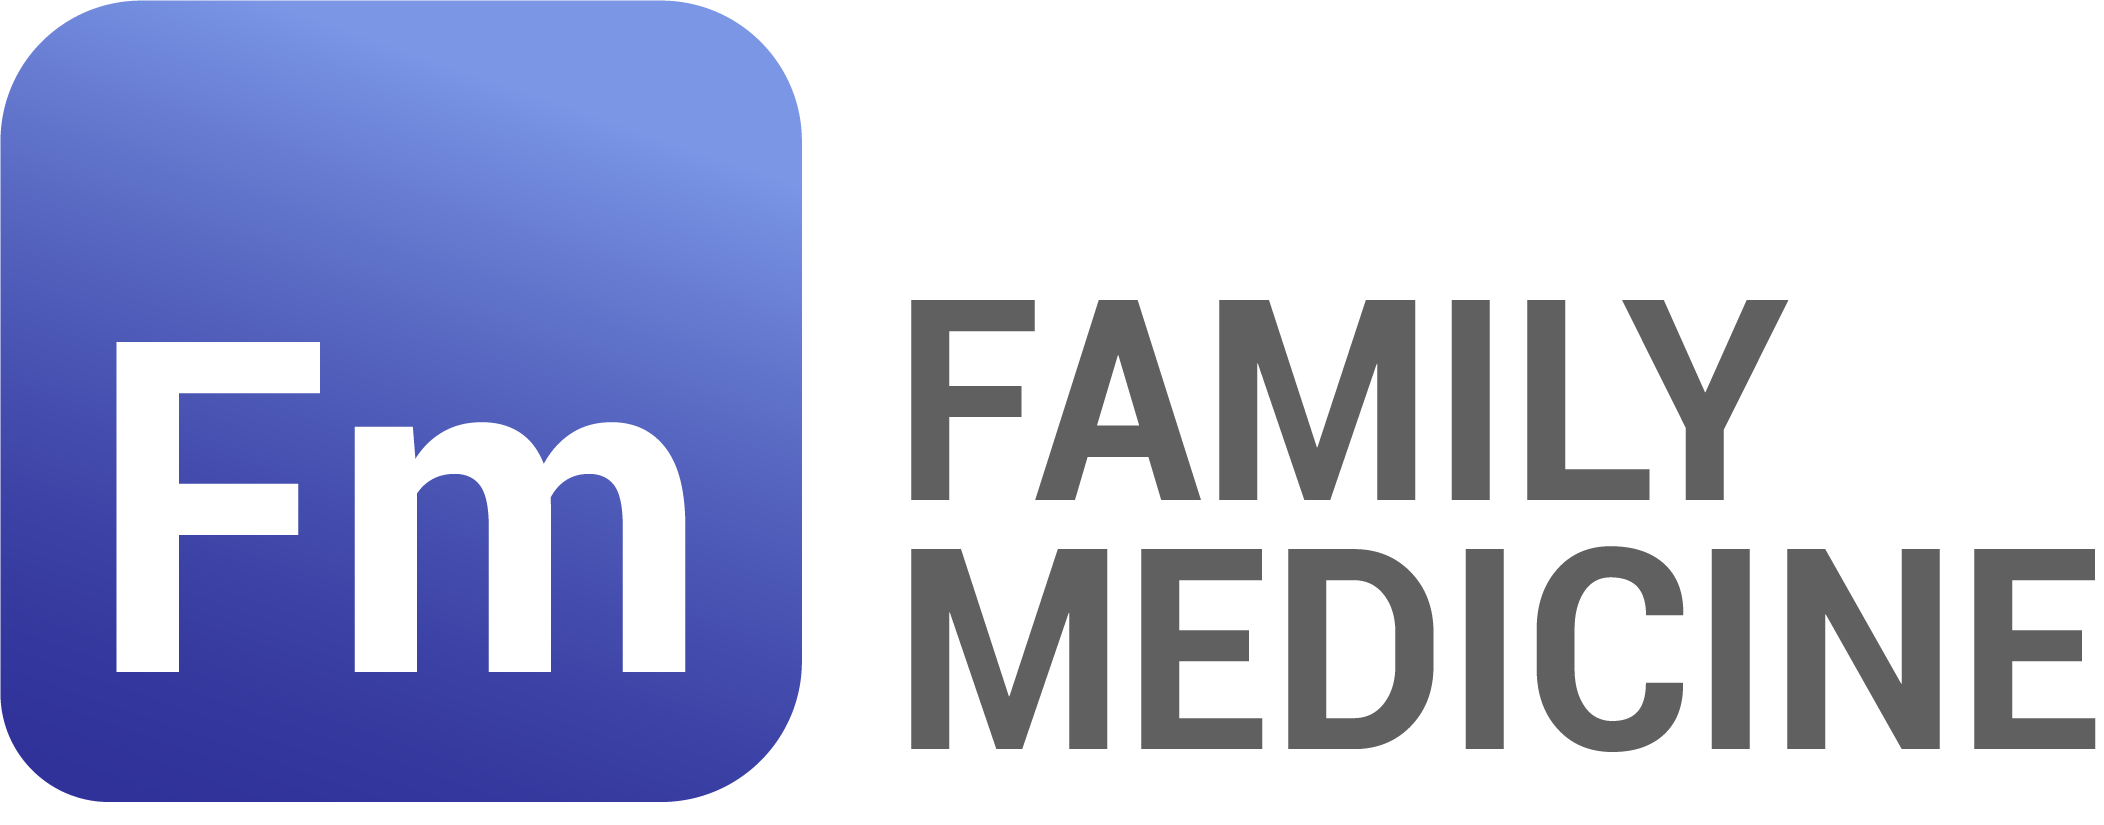 Family Medicine Image